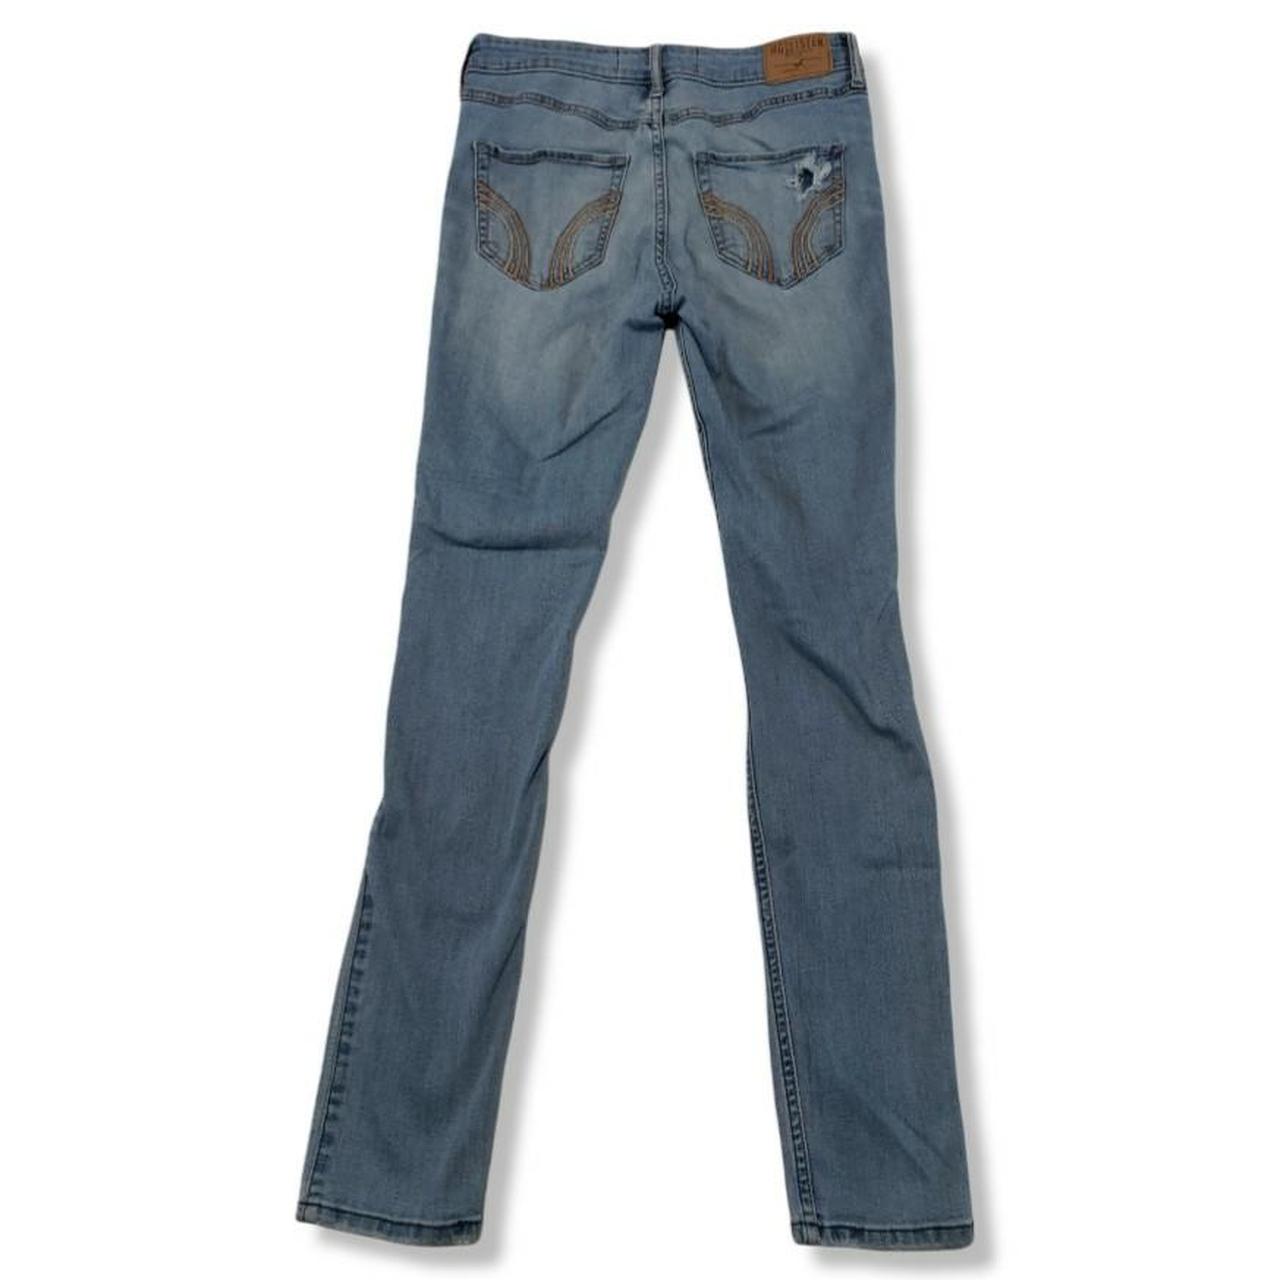 Buy the Hollister Women Blue Denim Jeans 00R NWT